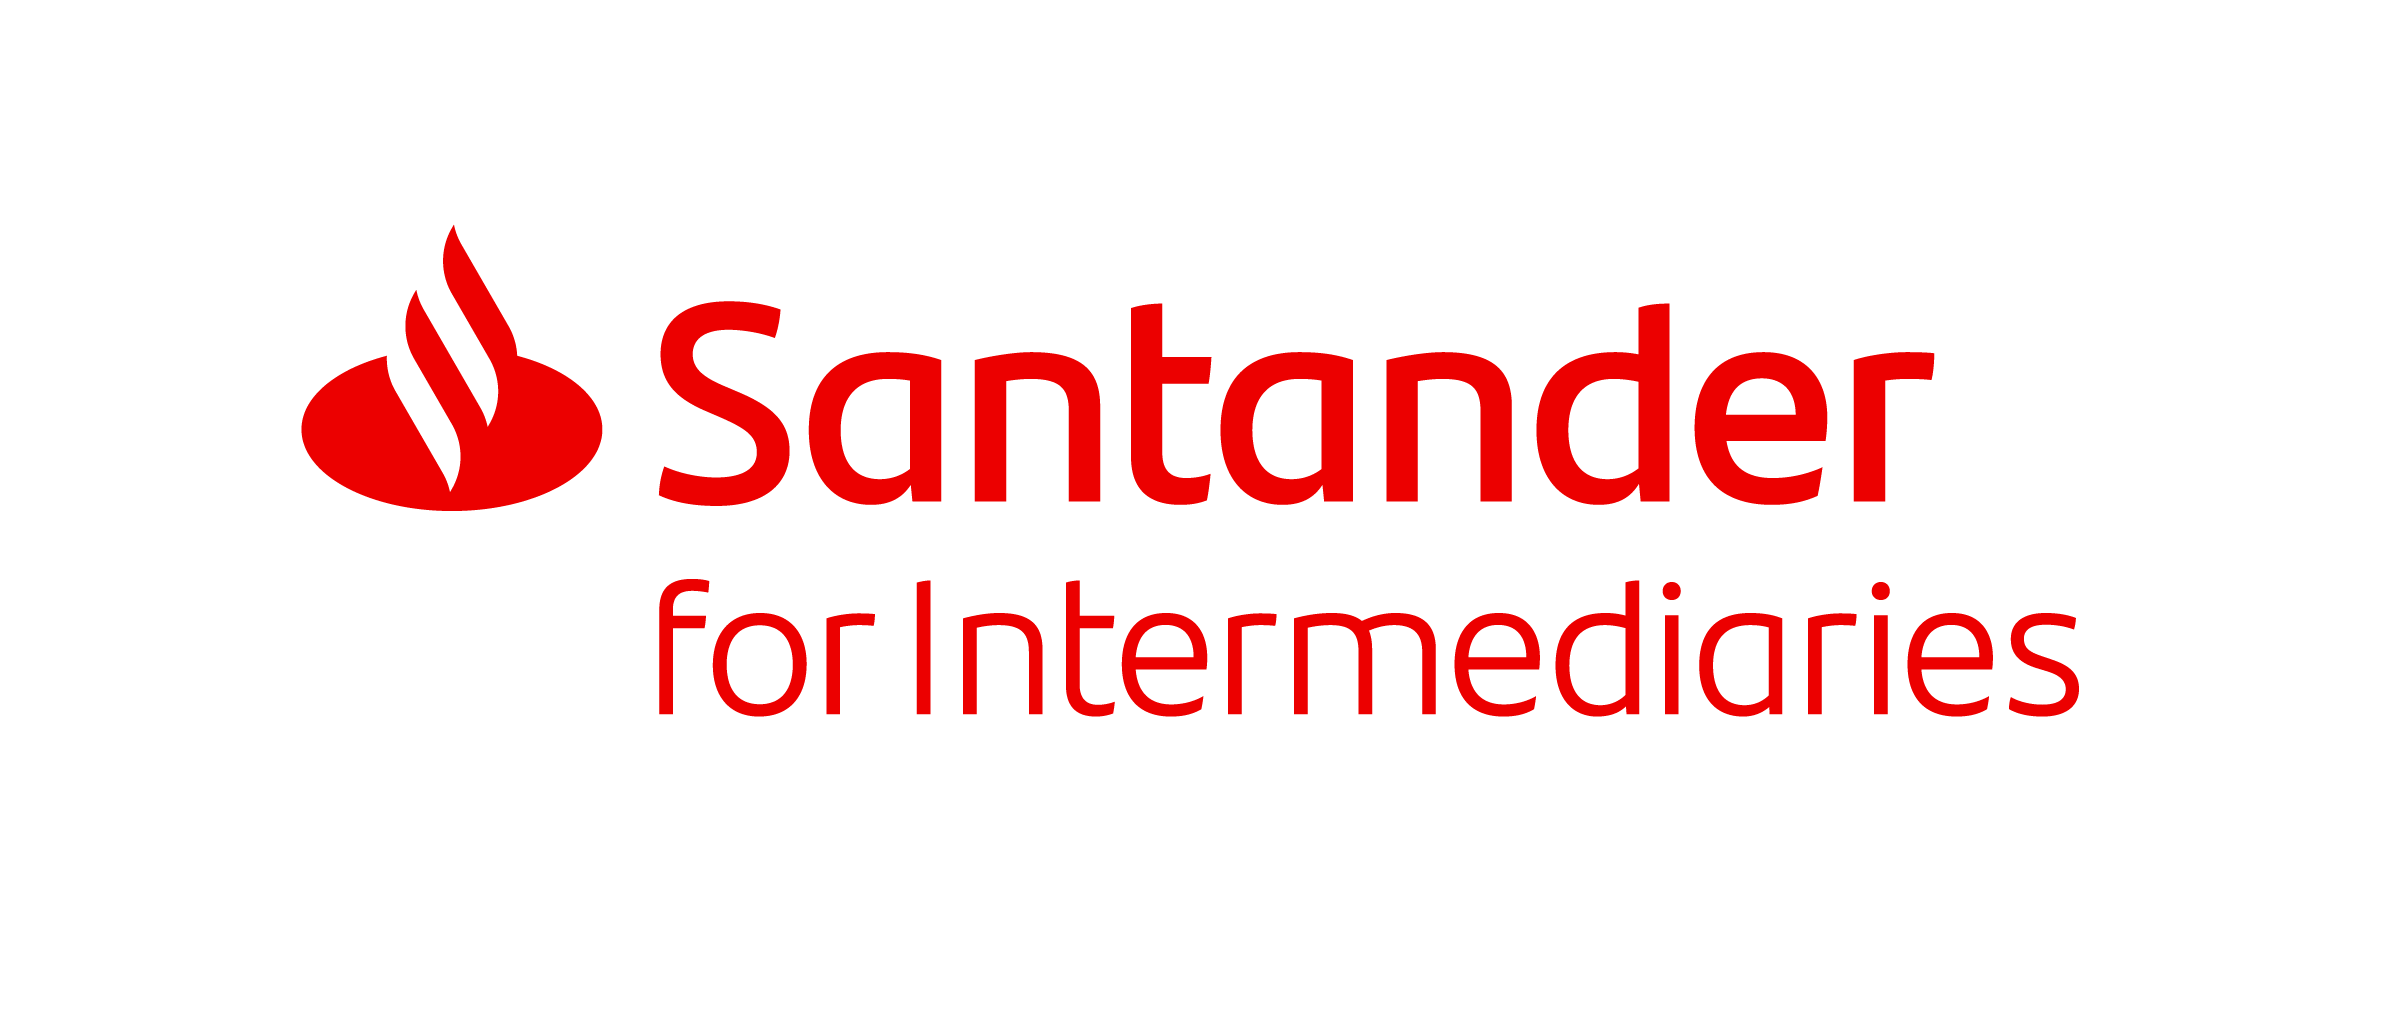 fa_santander_for_intermediaries_cv_pos_rgb